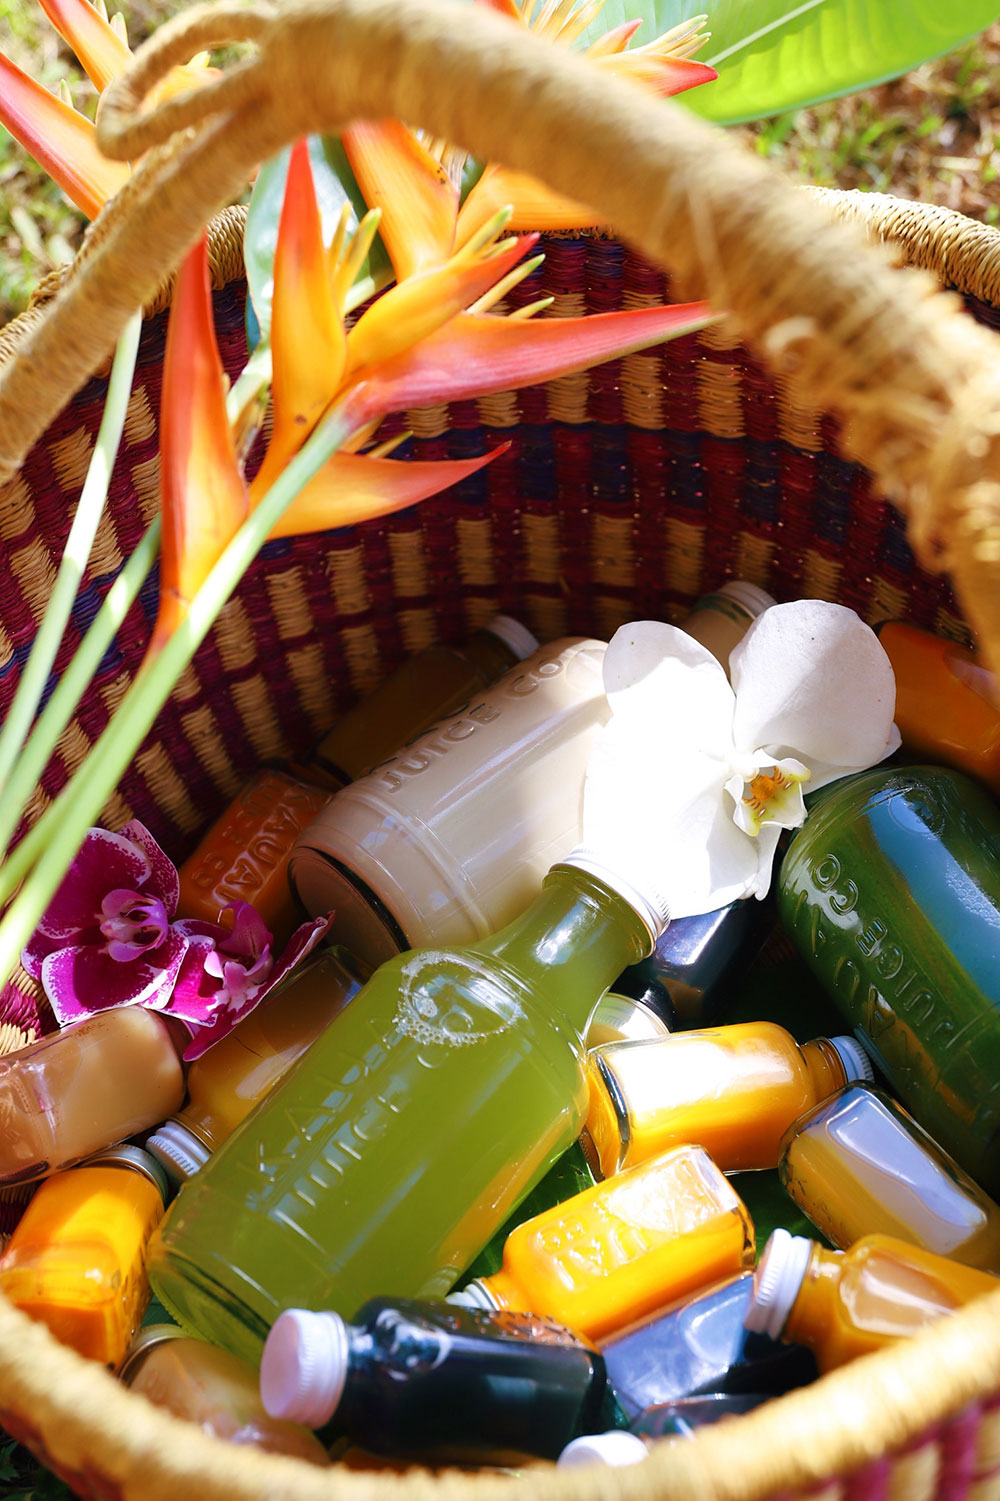 Bottles of elixers, kombucha, and juice in a basket